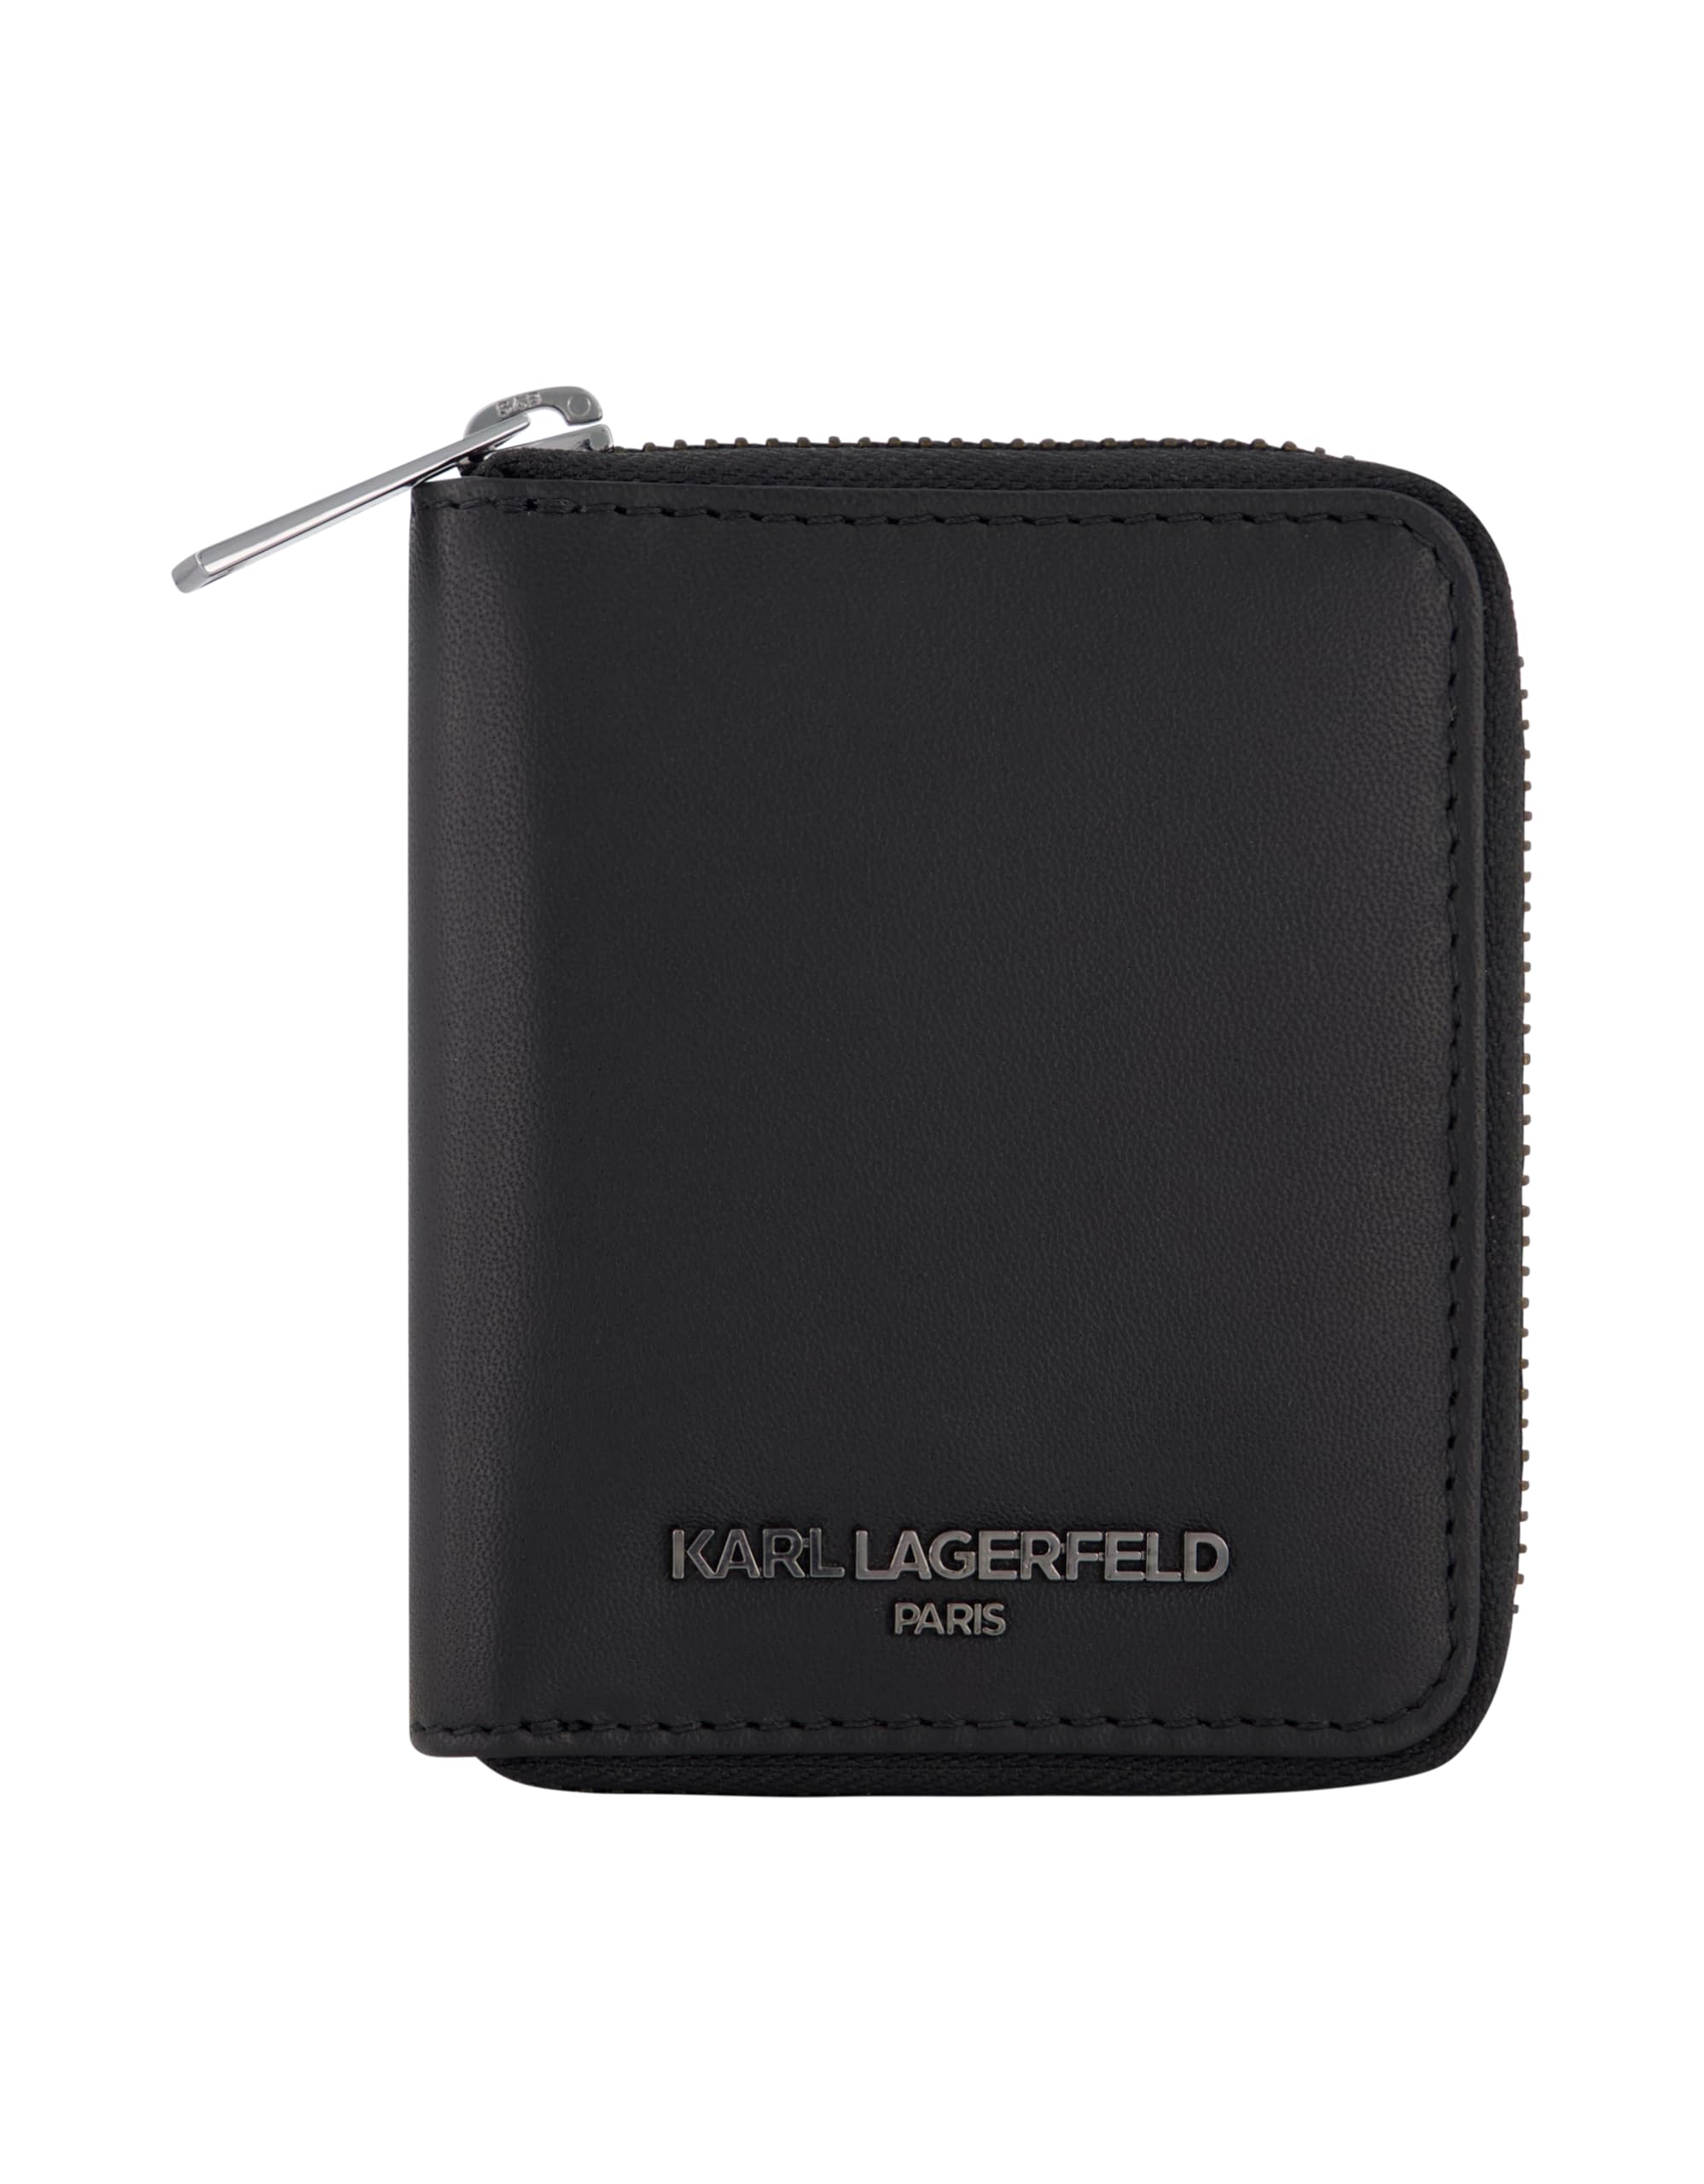 Karl Lagerfeld Paris Men's Nappa Grey Bubble Leather Iconic Logo on a Gunmetal Plate Zip Around Wallet, Black_logo3, One Size